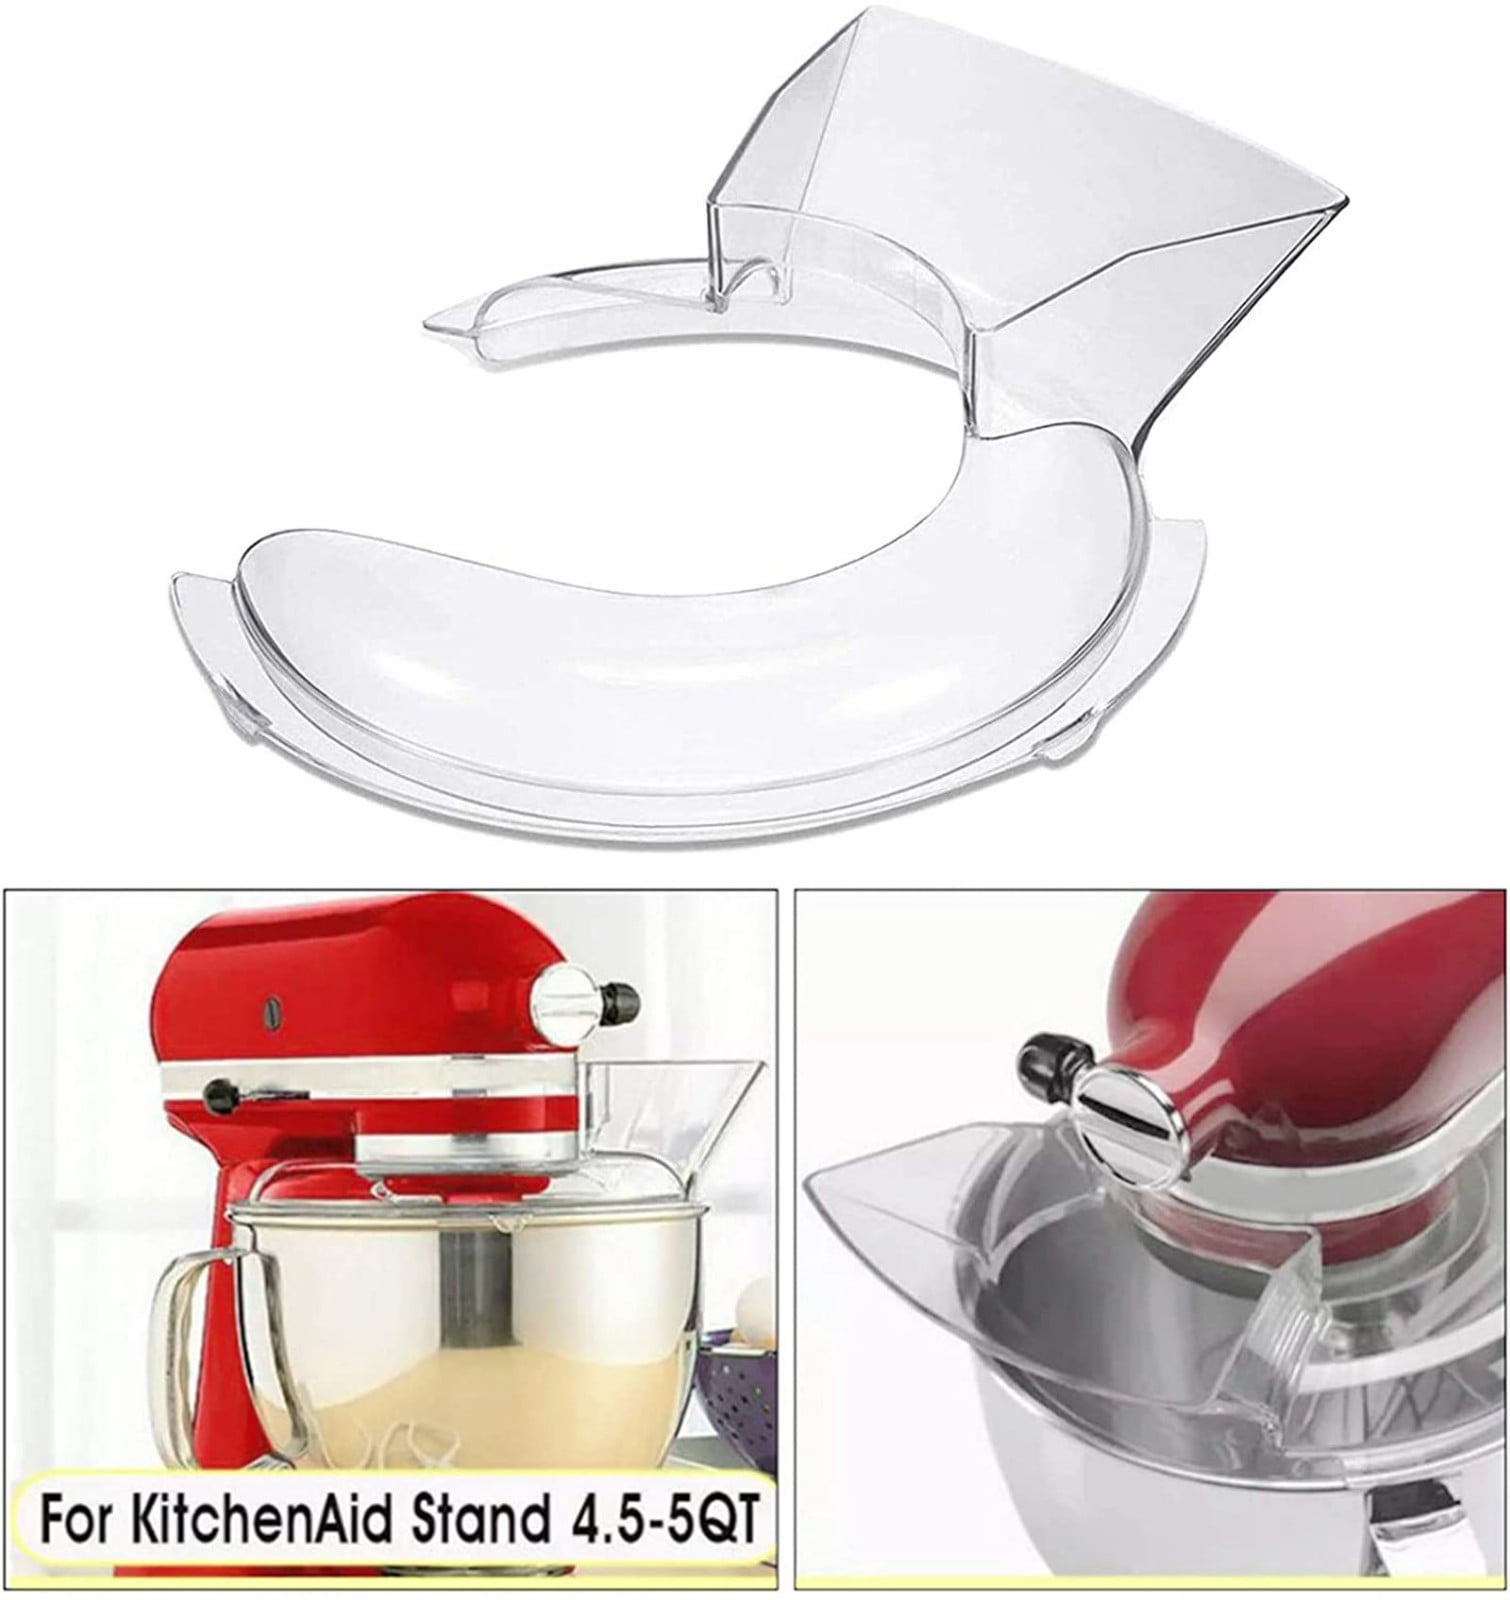 4.5-5QT Bowl Pouring Shield Tilt Head Kit For KitchenAid Stand Mixer